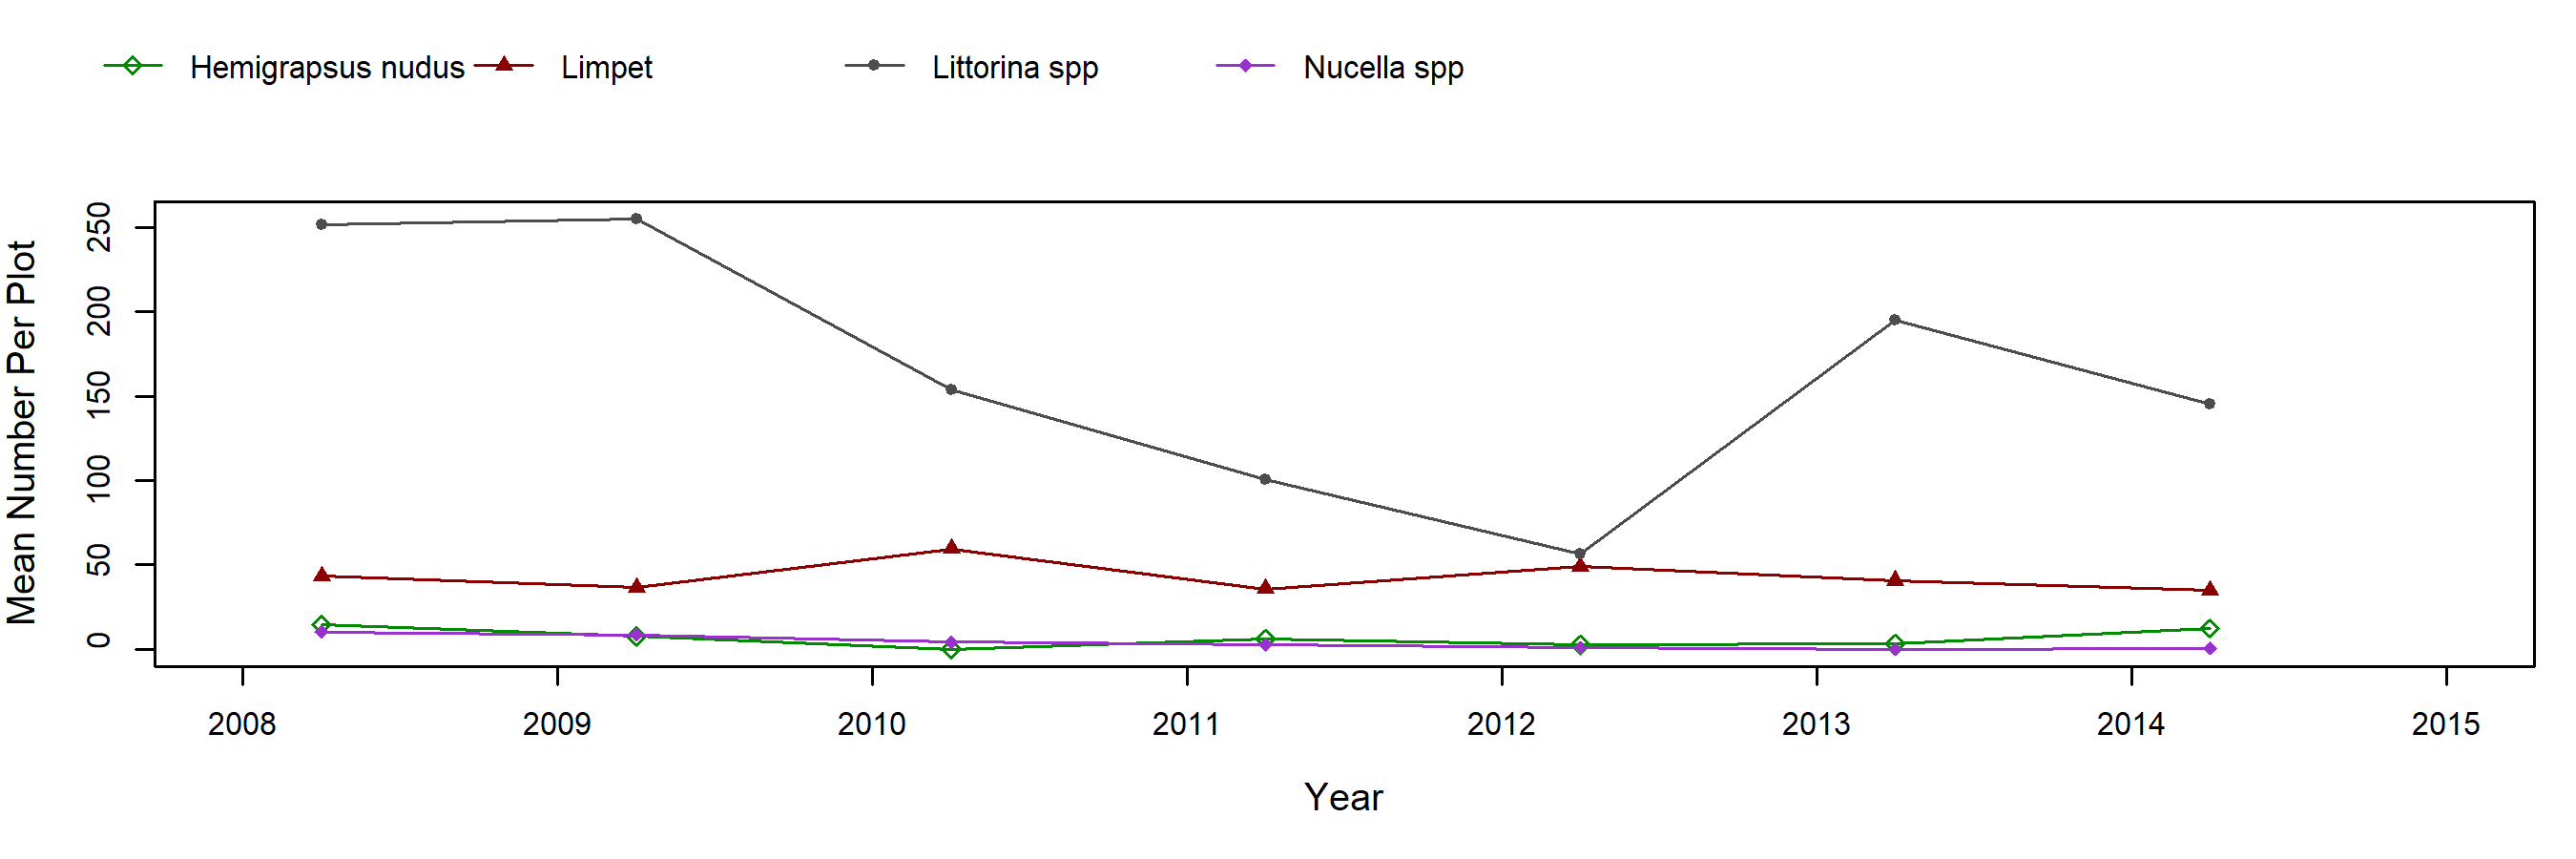 Kydikabbit Point Mytilus trend plot